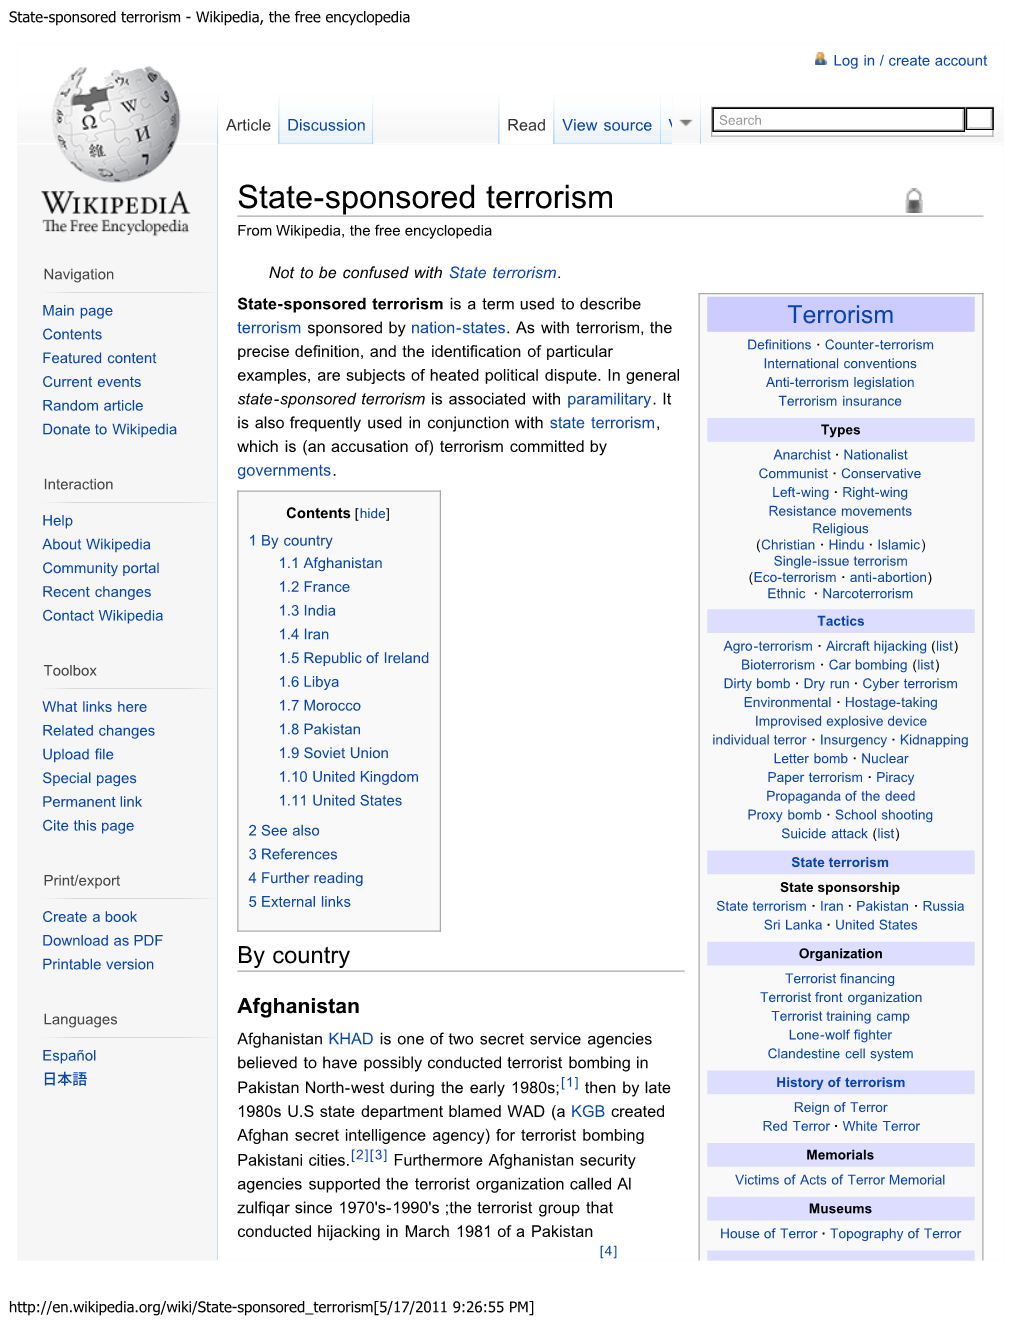 State-Sponsored Terrorism - Wikipedia, the Free Encyclopedia